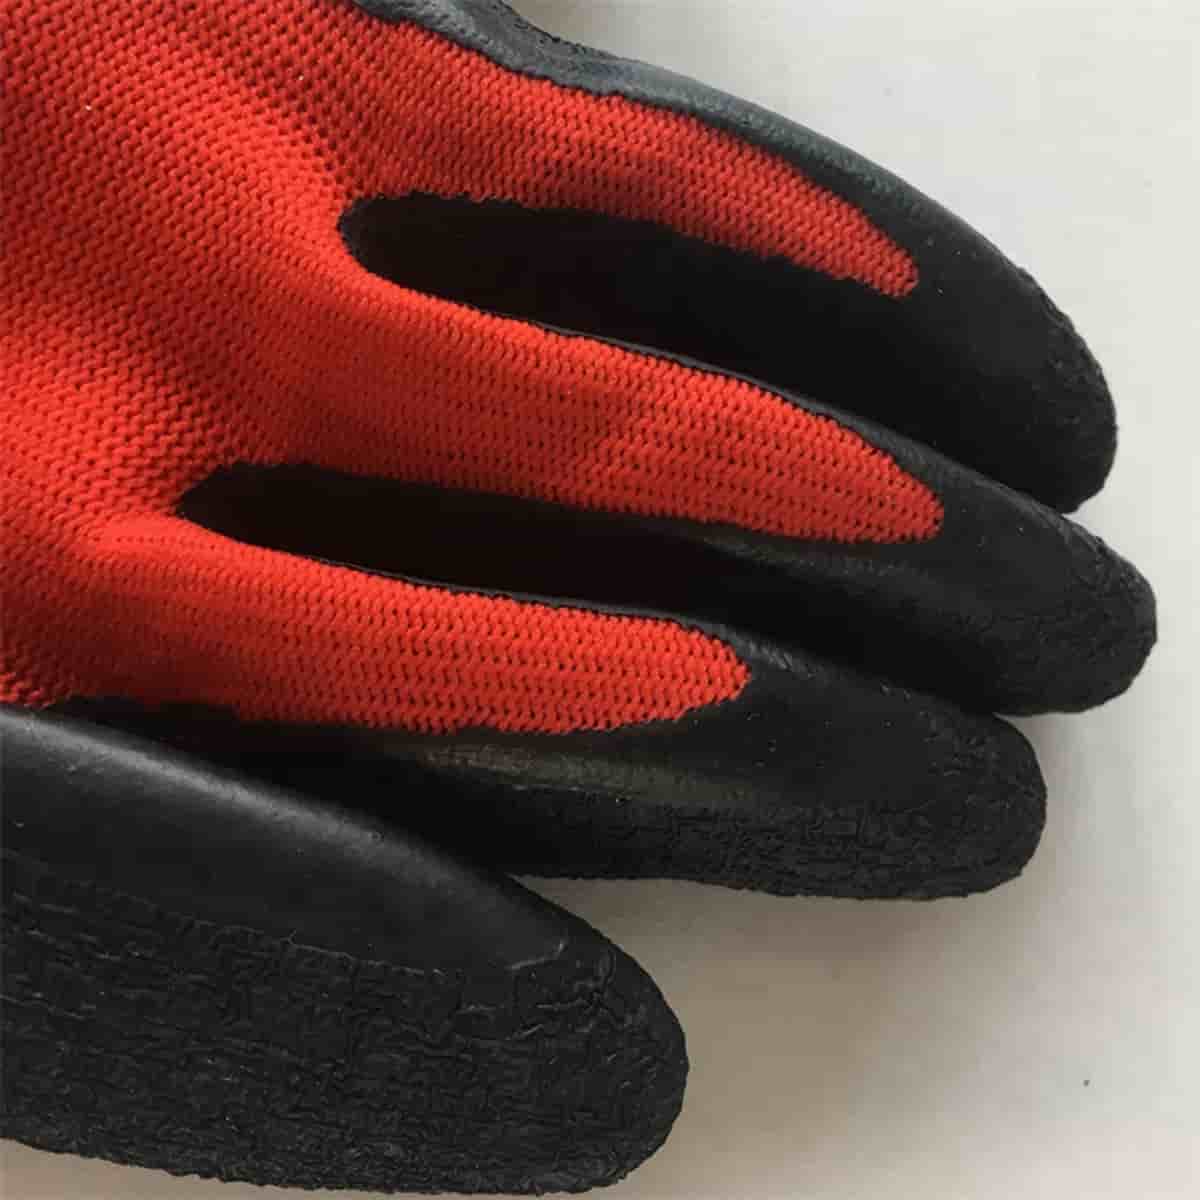 I-13 yeGauge yePolyester iCrinkle Latex eCoated Glove